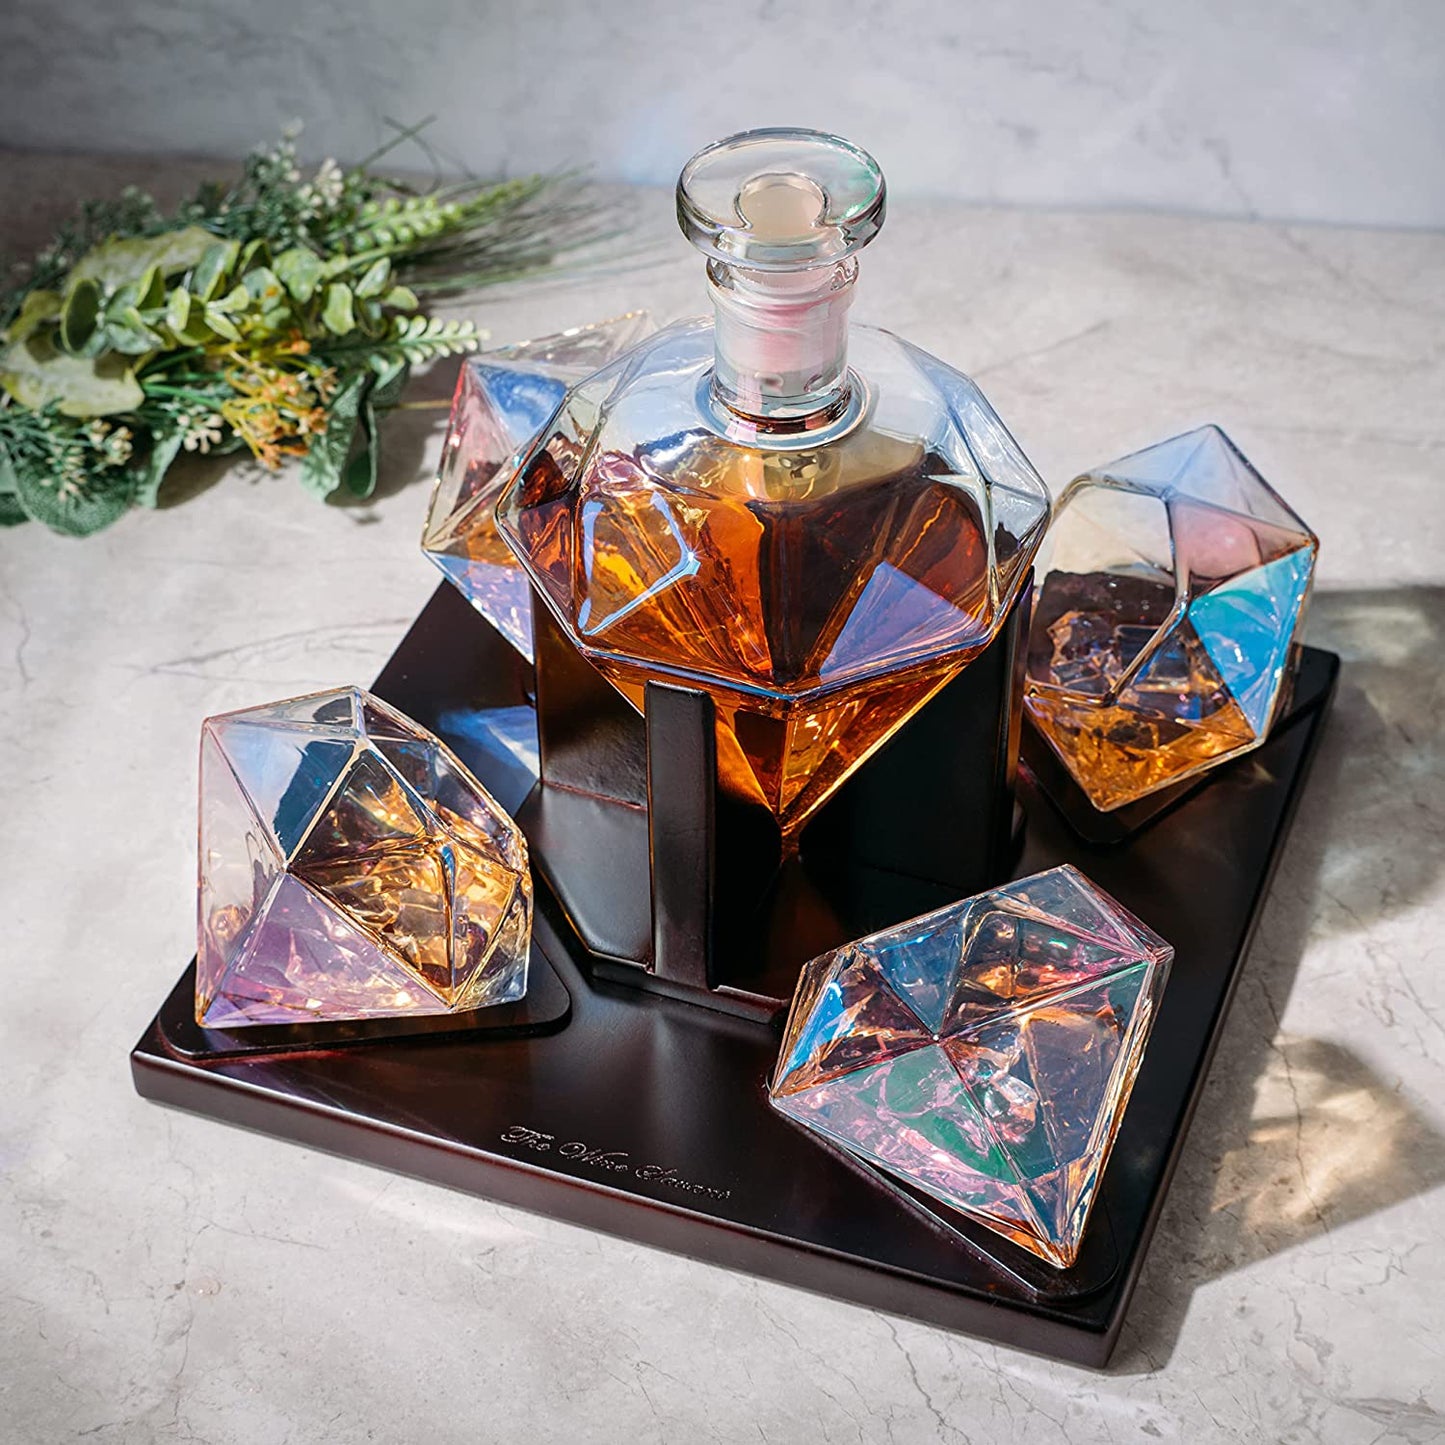 The Wine Savant - Diamond Whiskey and Wine Decanter - 750m w/ 4 Diamond Glasses - Beautiful Mahogany Wooden Holder